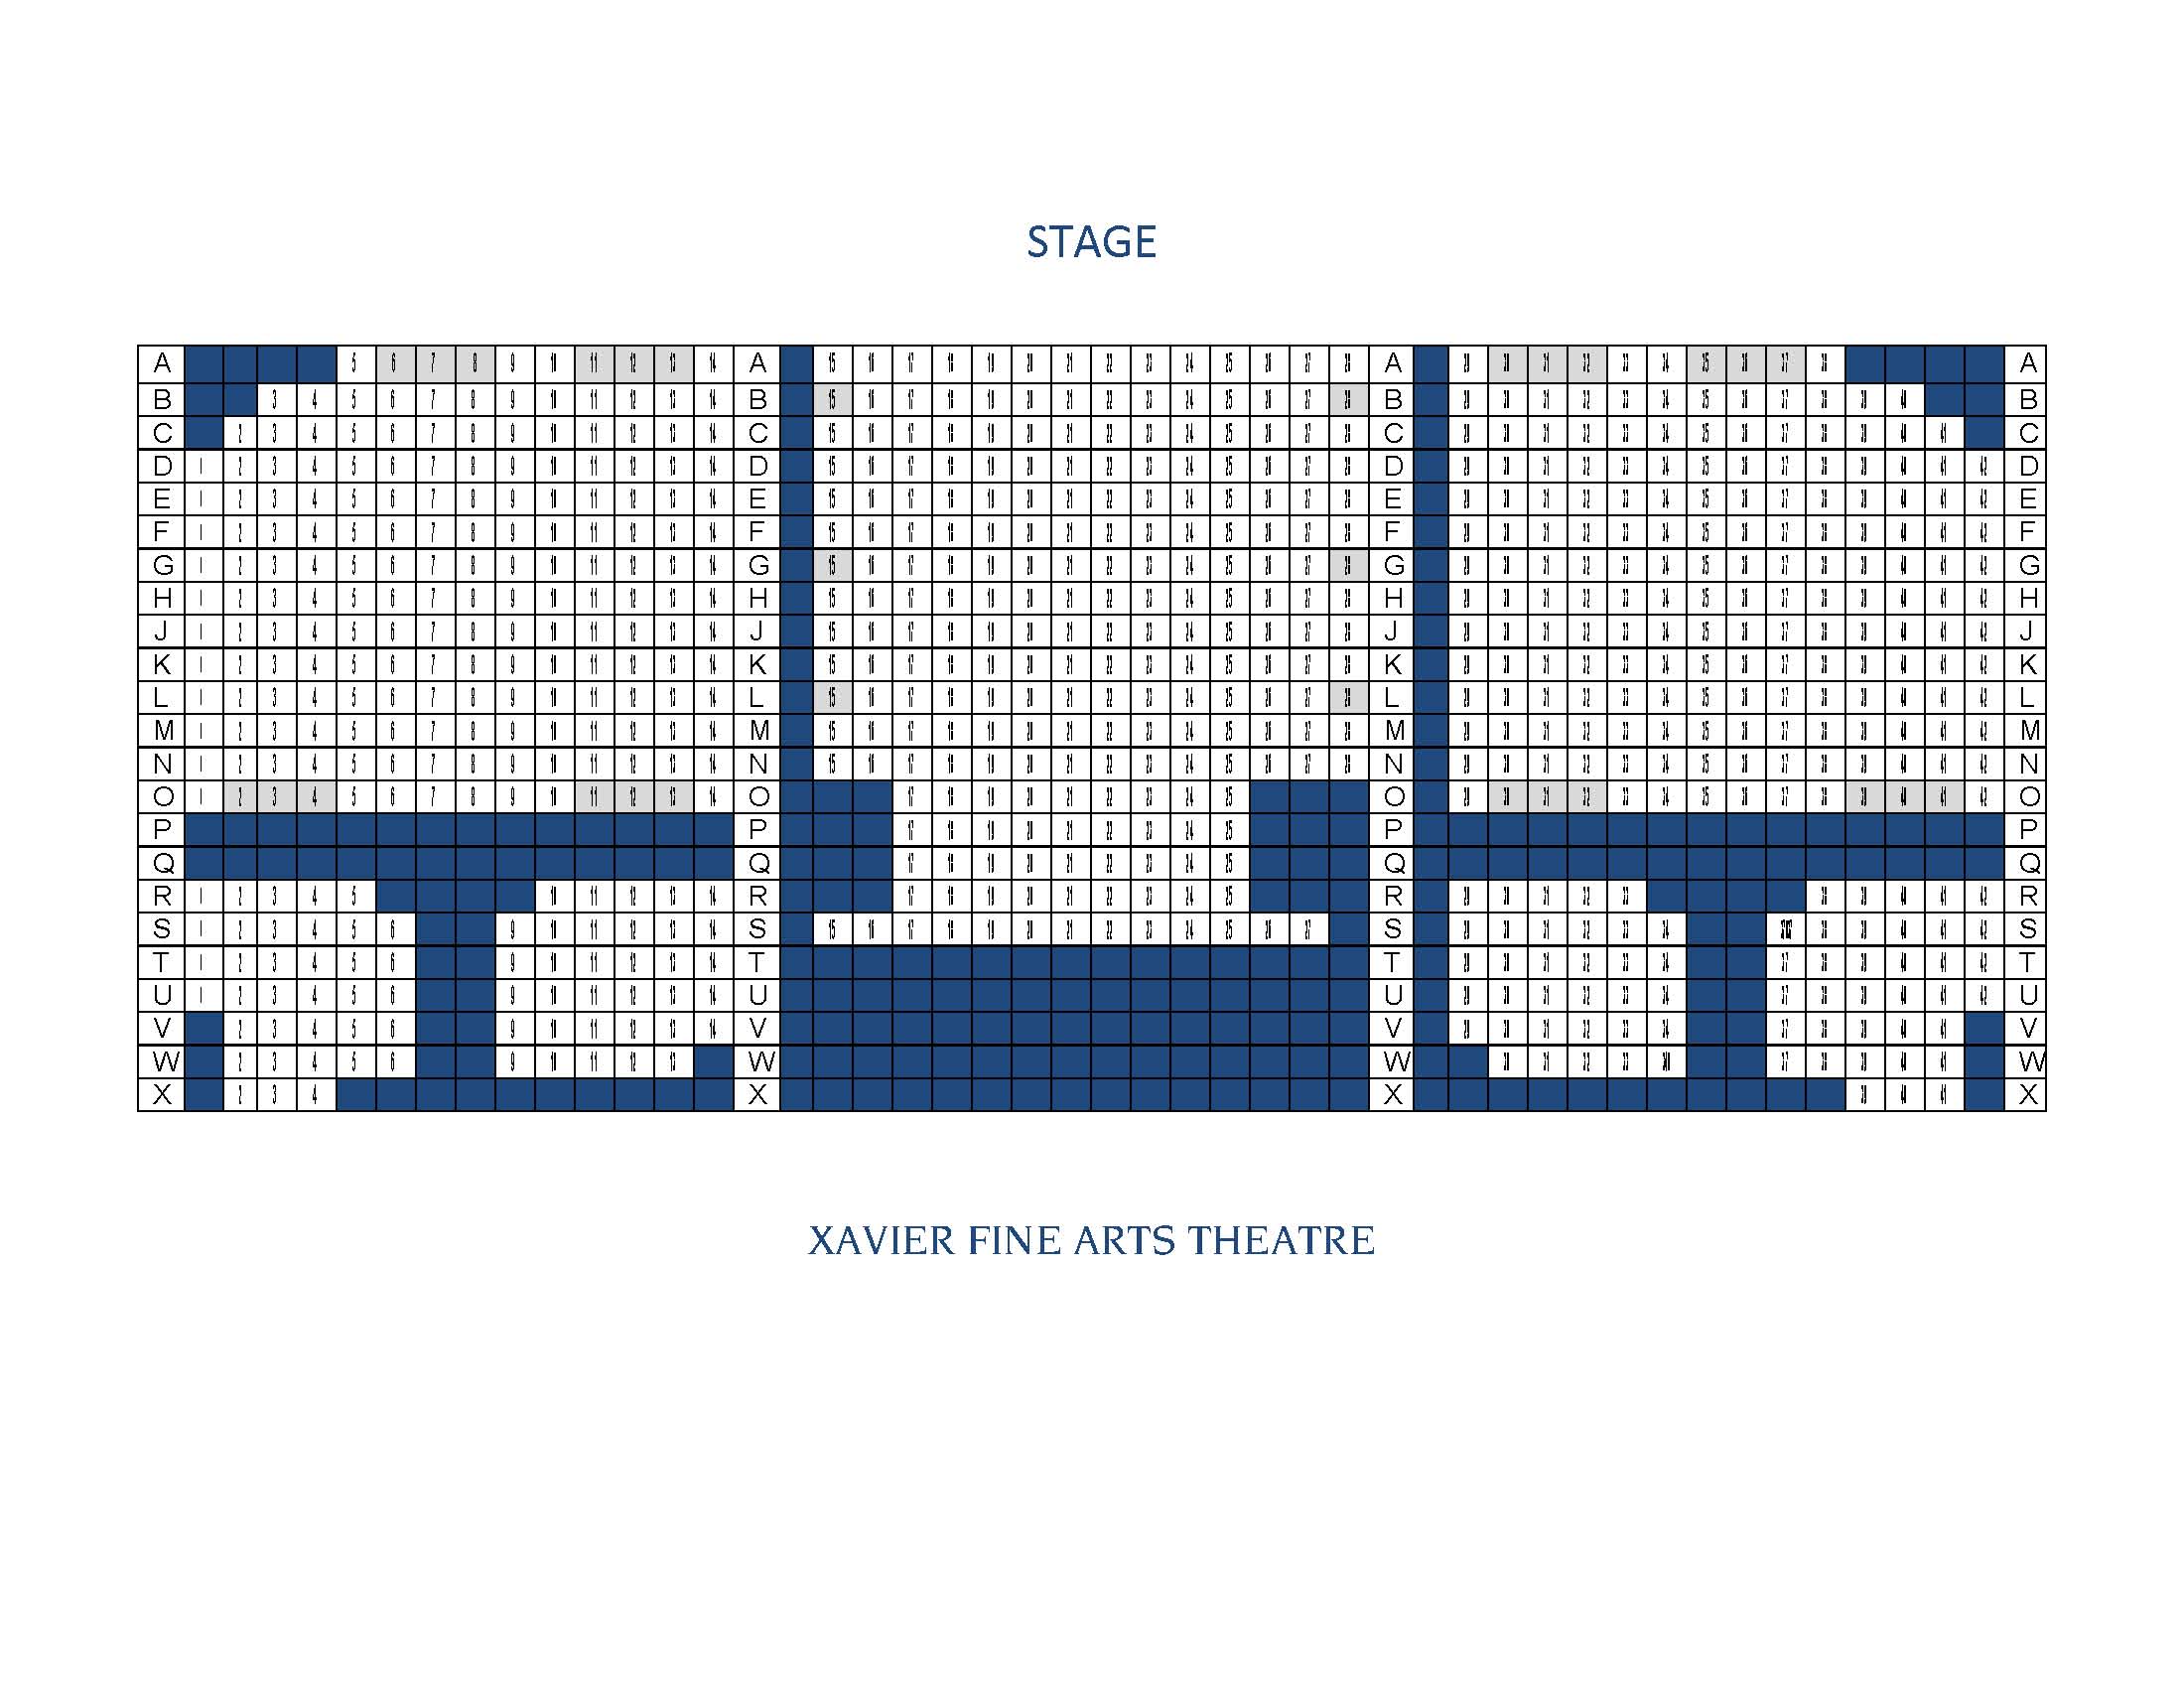 Xavier Fine Arts Theatre seating chart